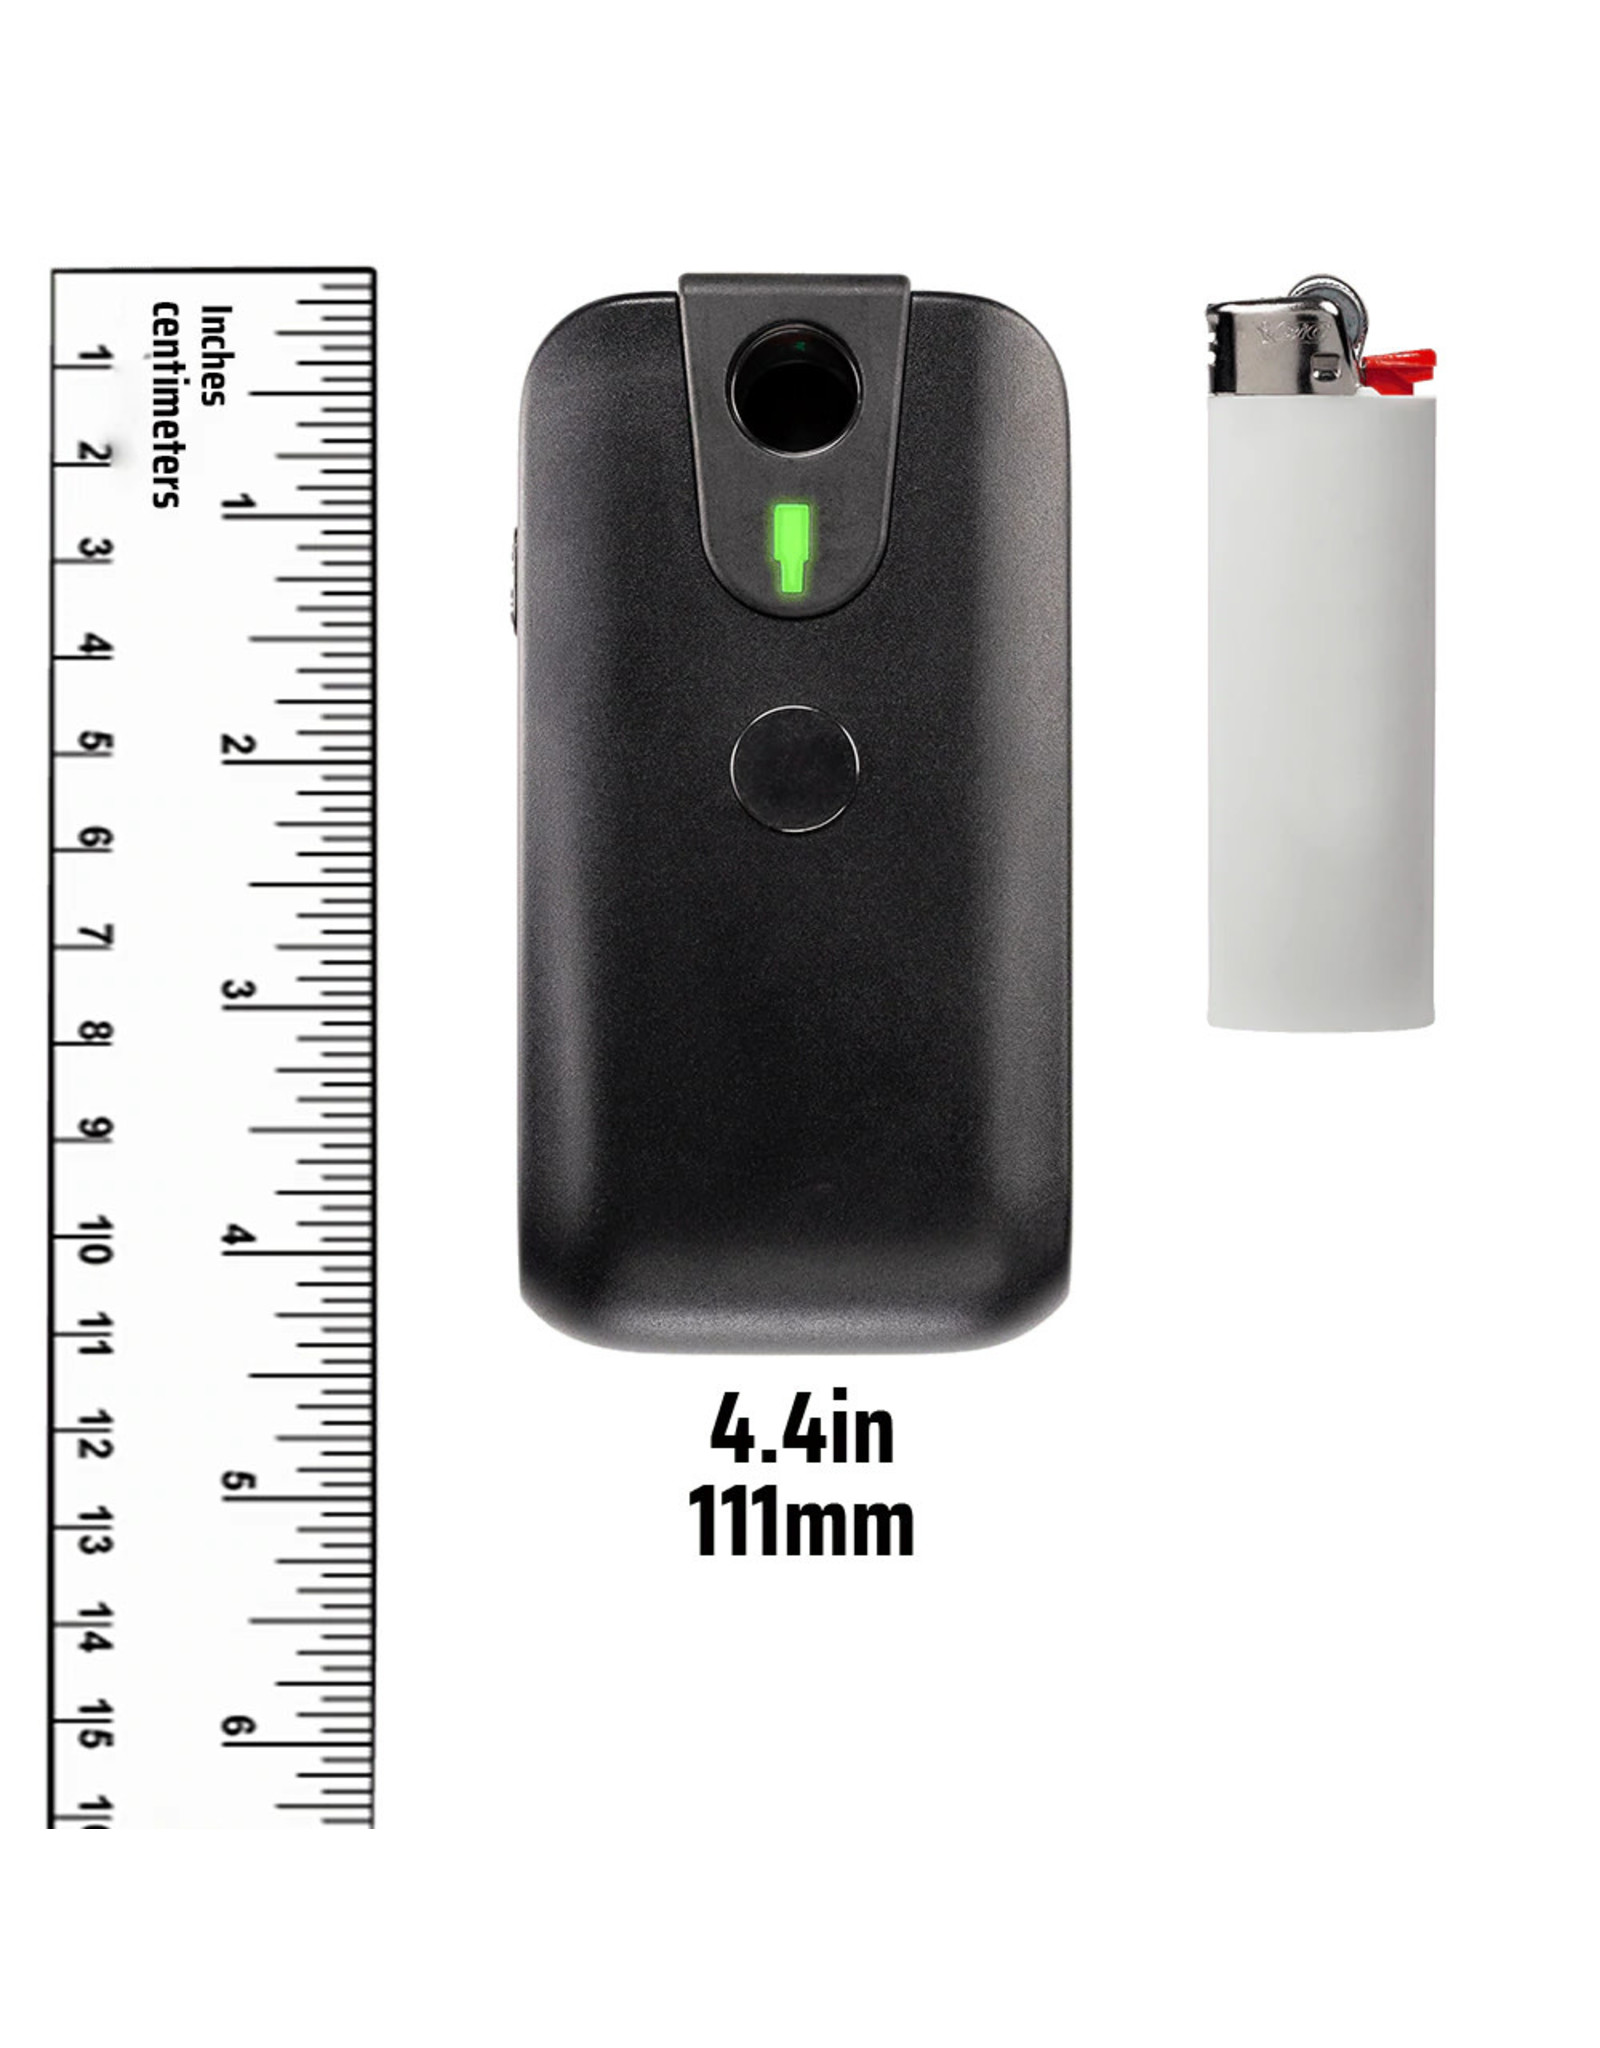 DynaVap DynaTec Orion 2 Portable Pocket Induction Heater By Dynavap